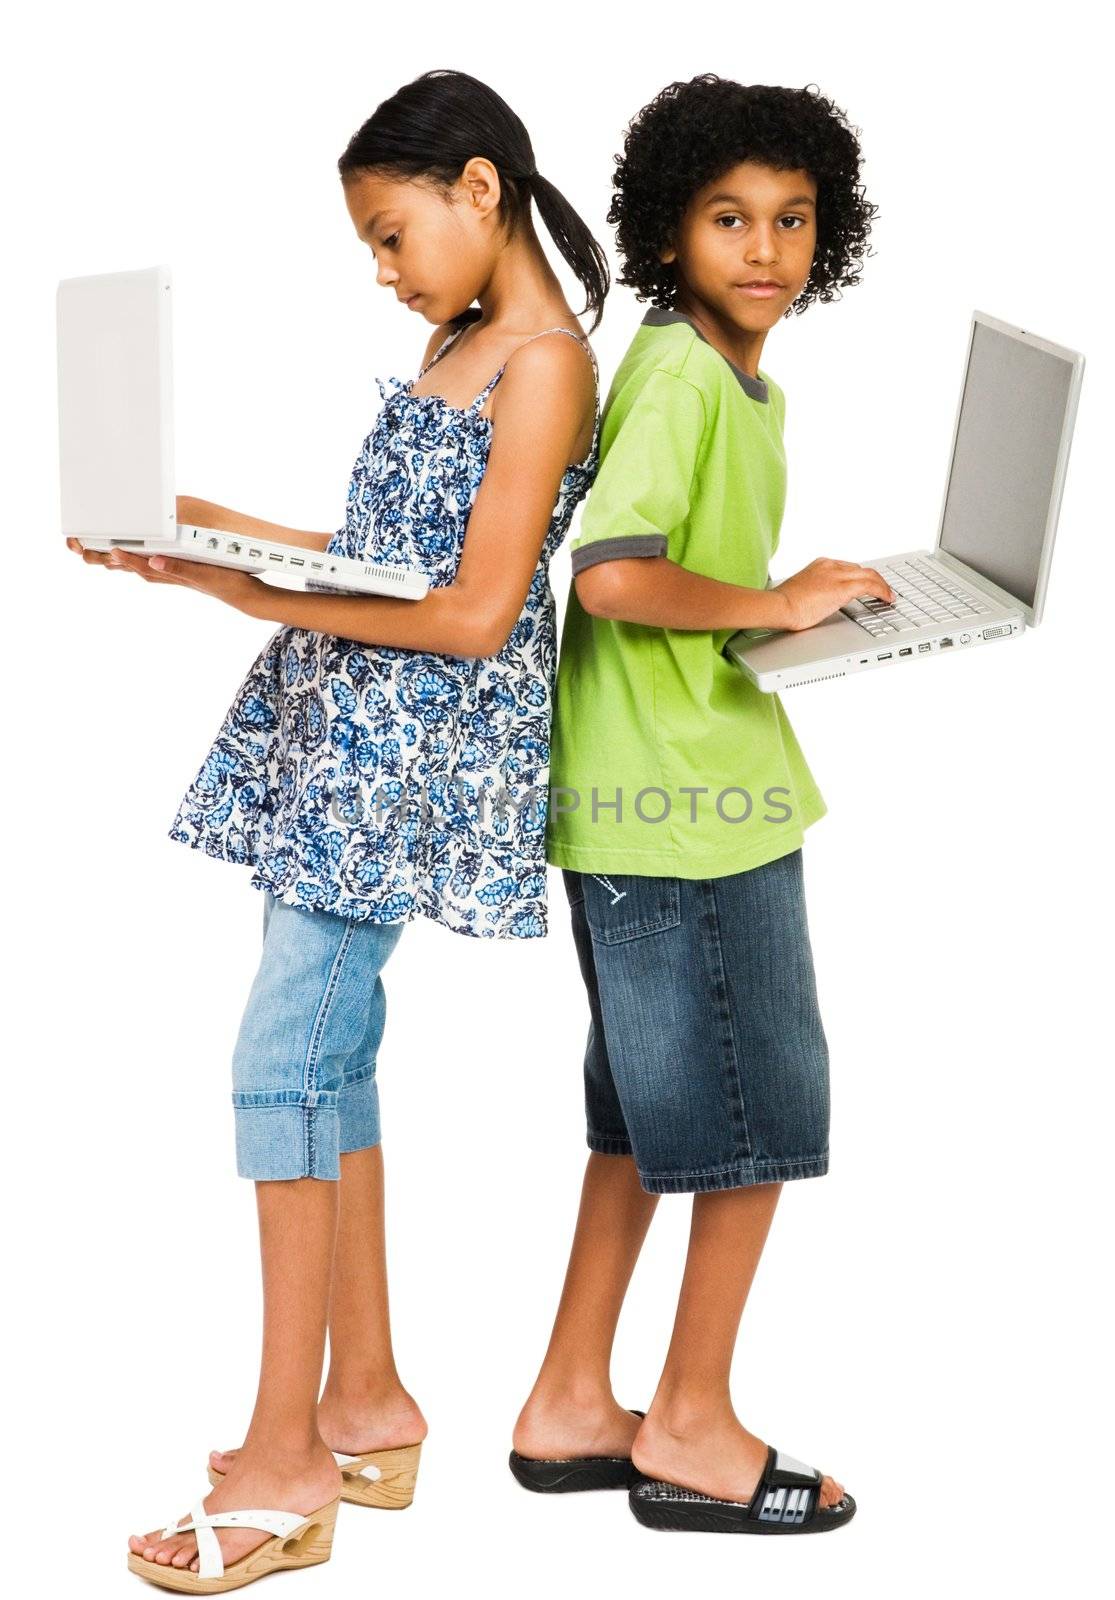 Children using laptops by jackmicro